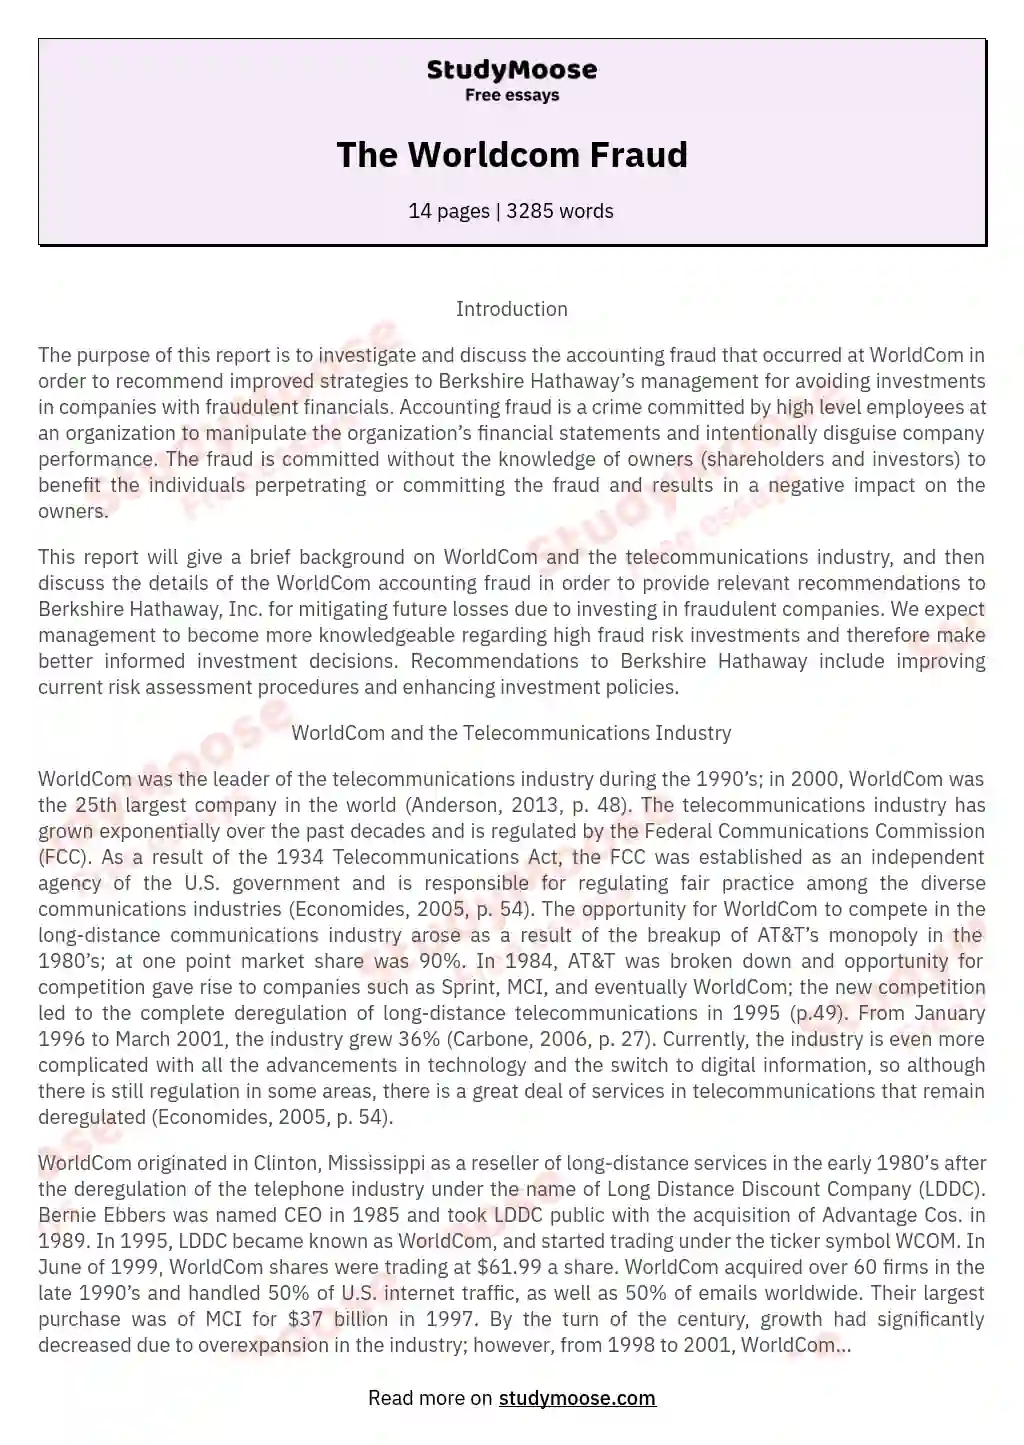 worldcom scandal case study pdf